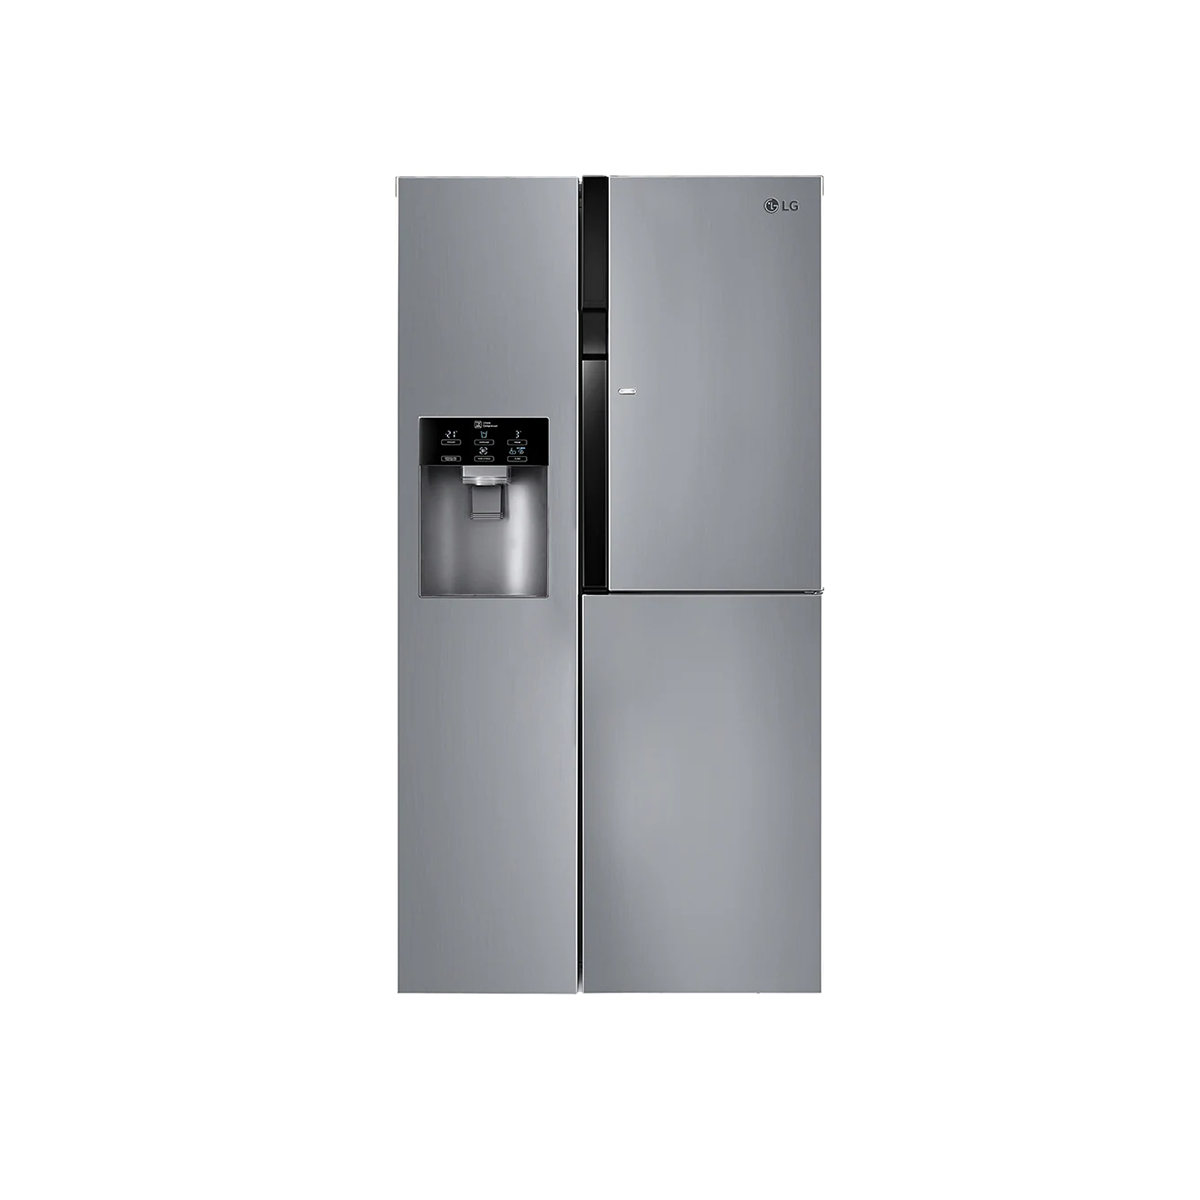 LG 663L Side-by-Side Refrigerator with Hygiene Fresh+ & Hygiene Filter